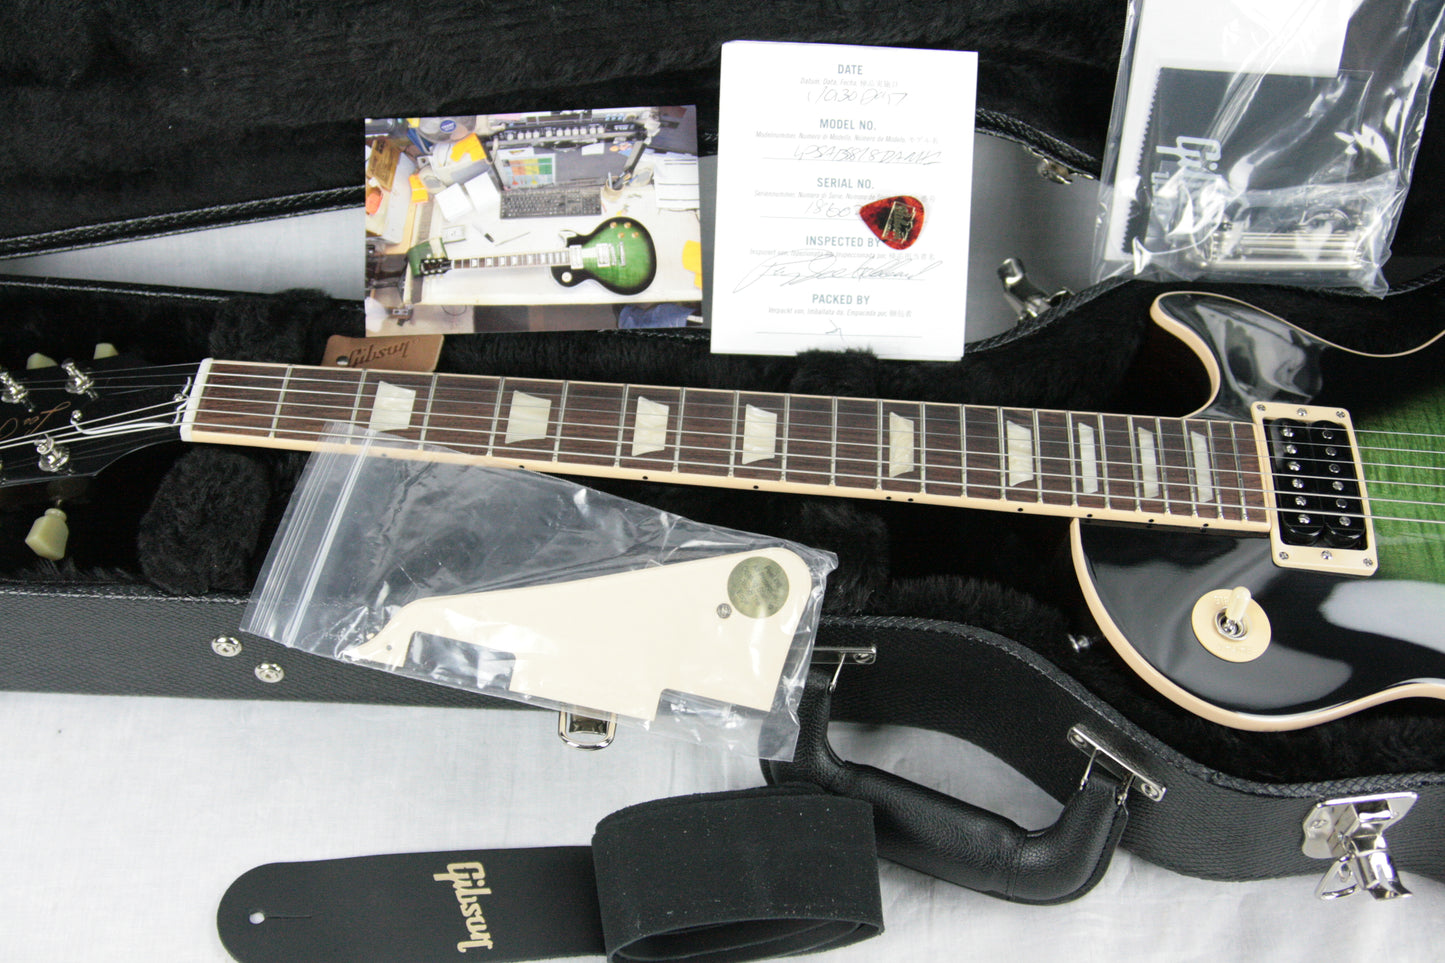 2018 Gibson SLASH Anaconda SIGNED Les Paul! Limited USA Model! 50 Made!